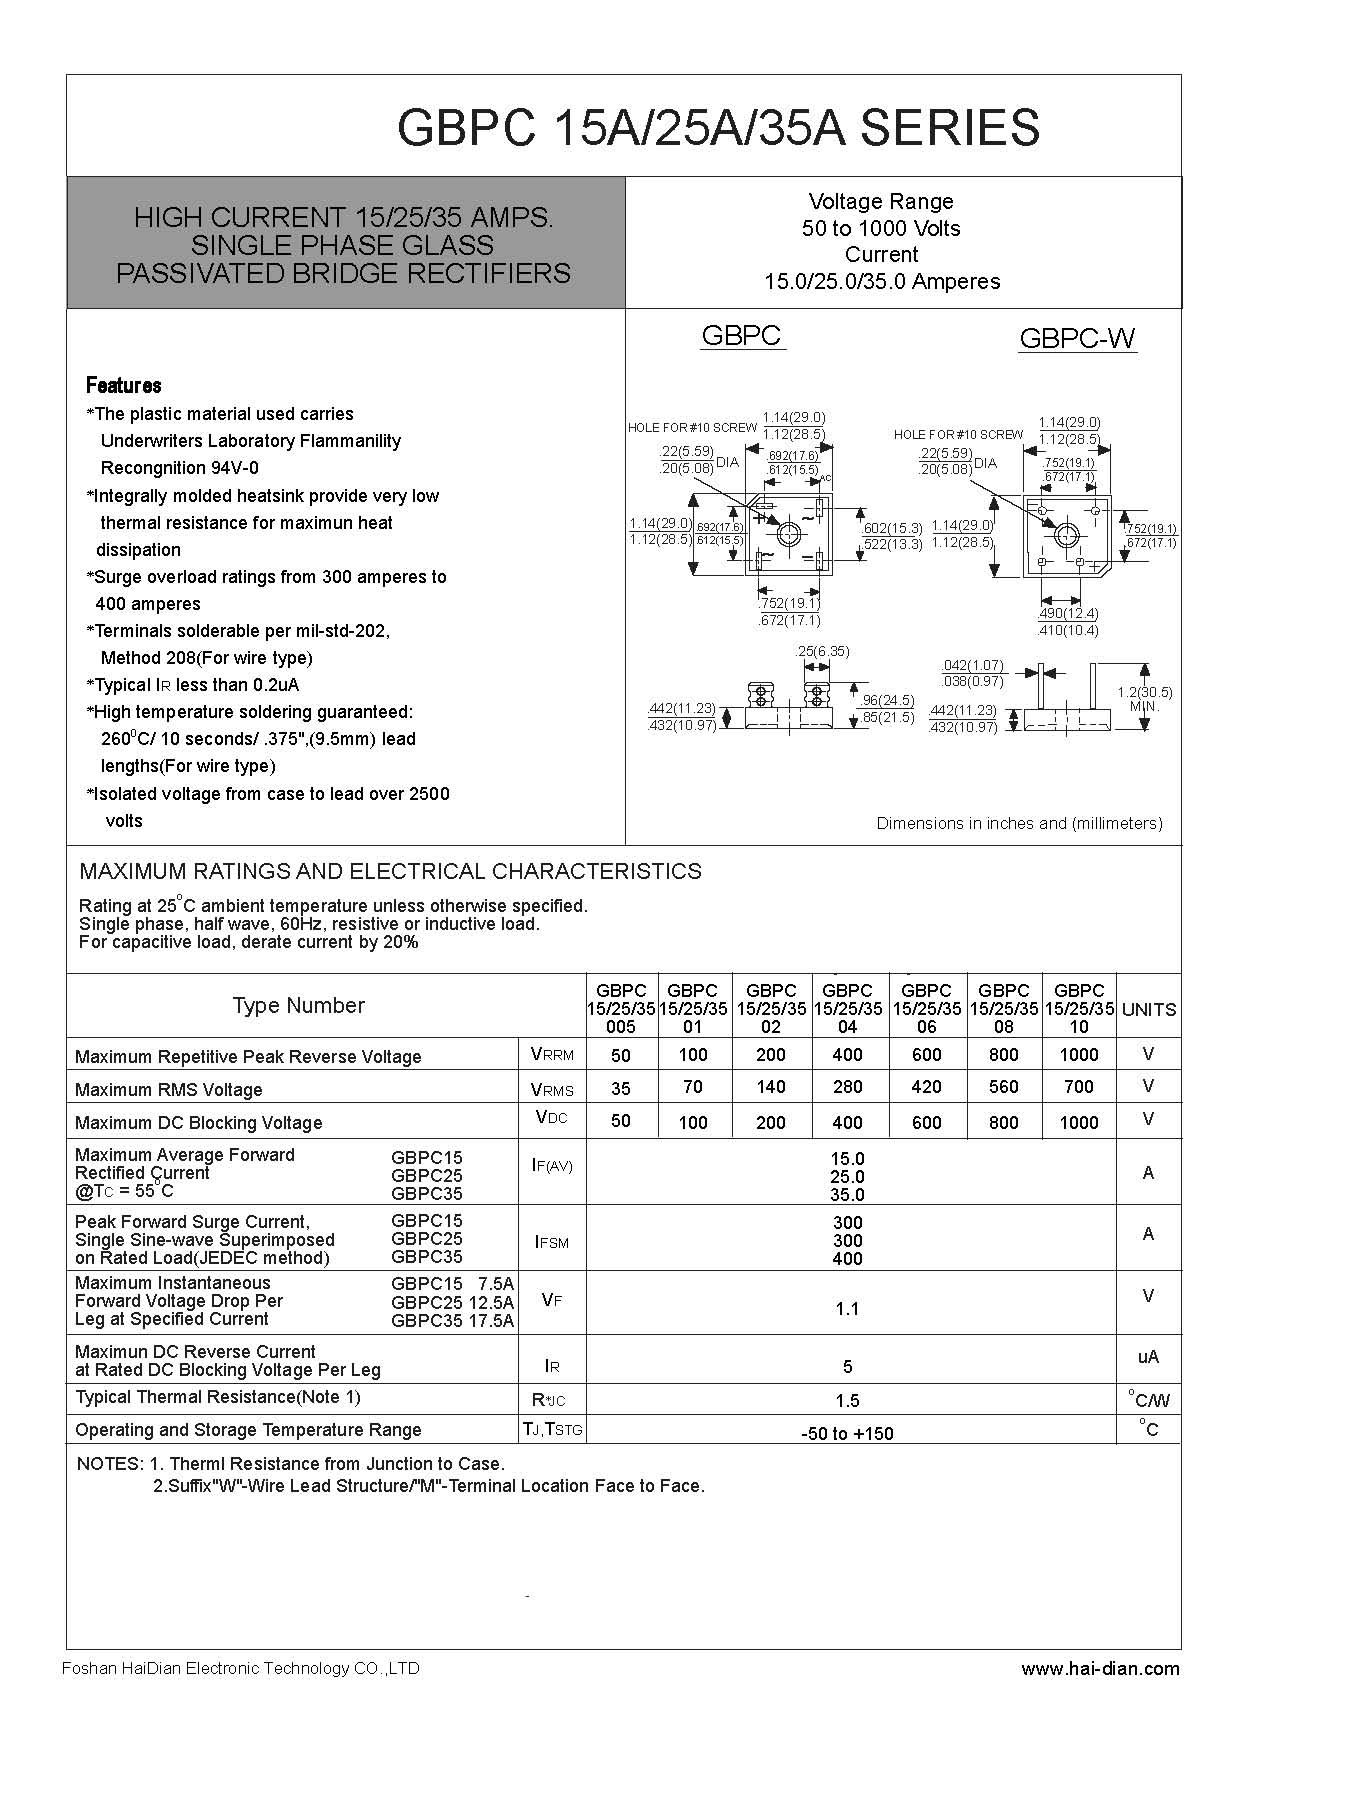 GBPC2502桥式整流器(整流桥堆)-- 佛山海电电子科技有限公司